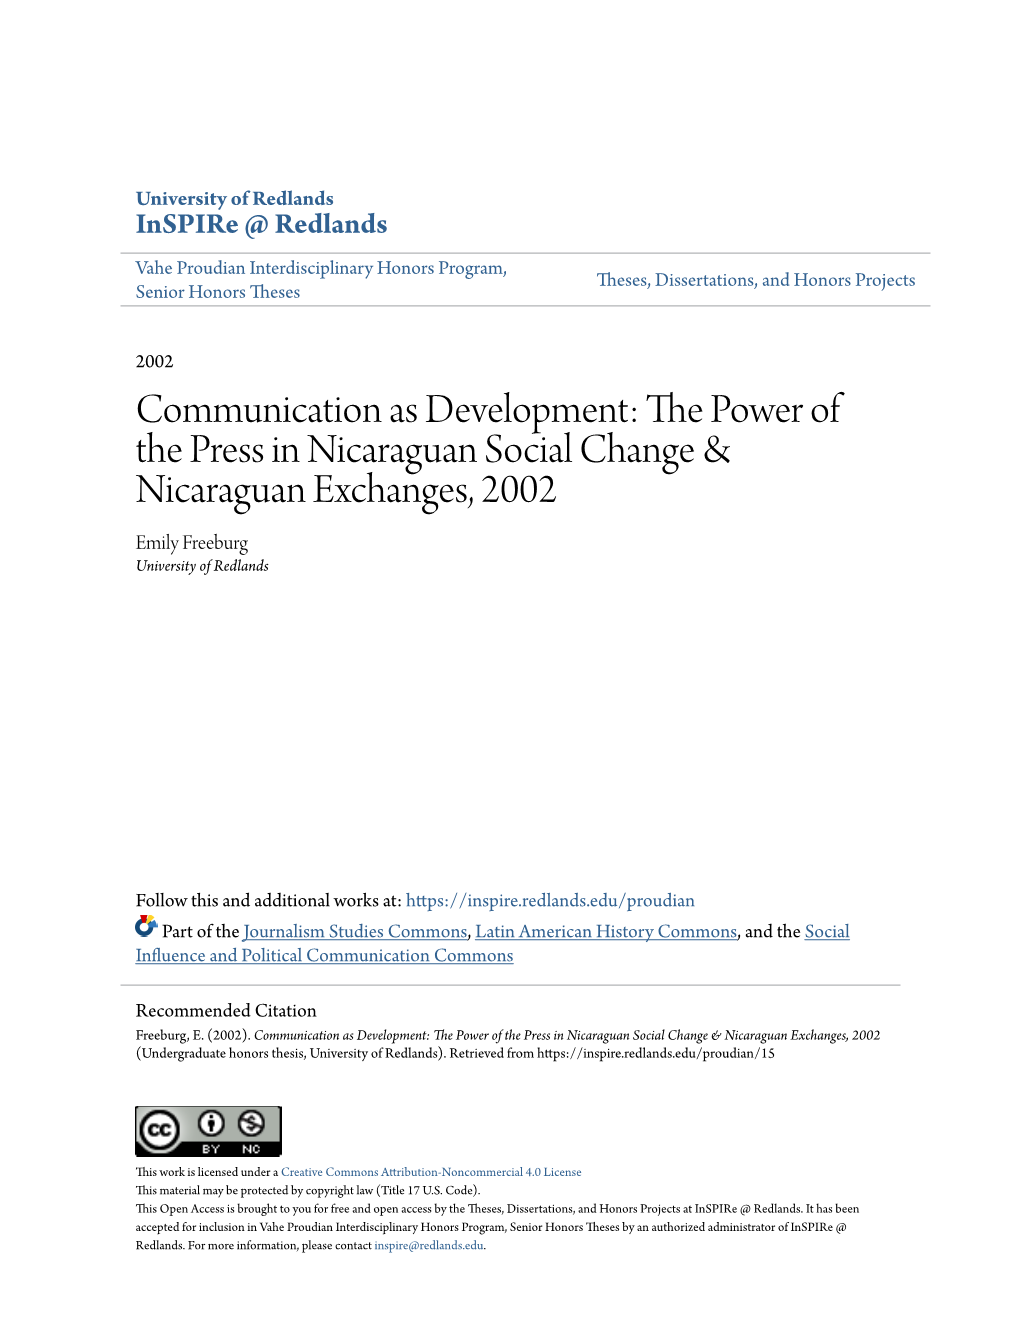 The Power of the Press in Nicaraguan Social Change & Nicaraguan